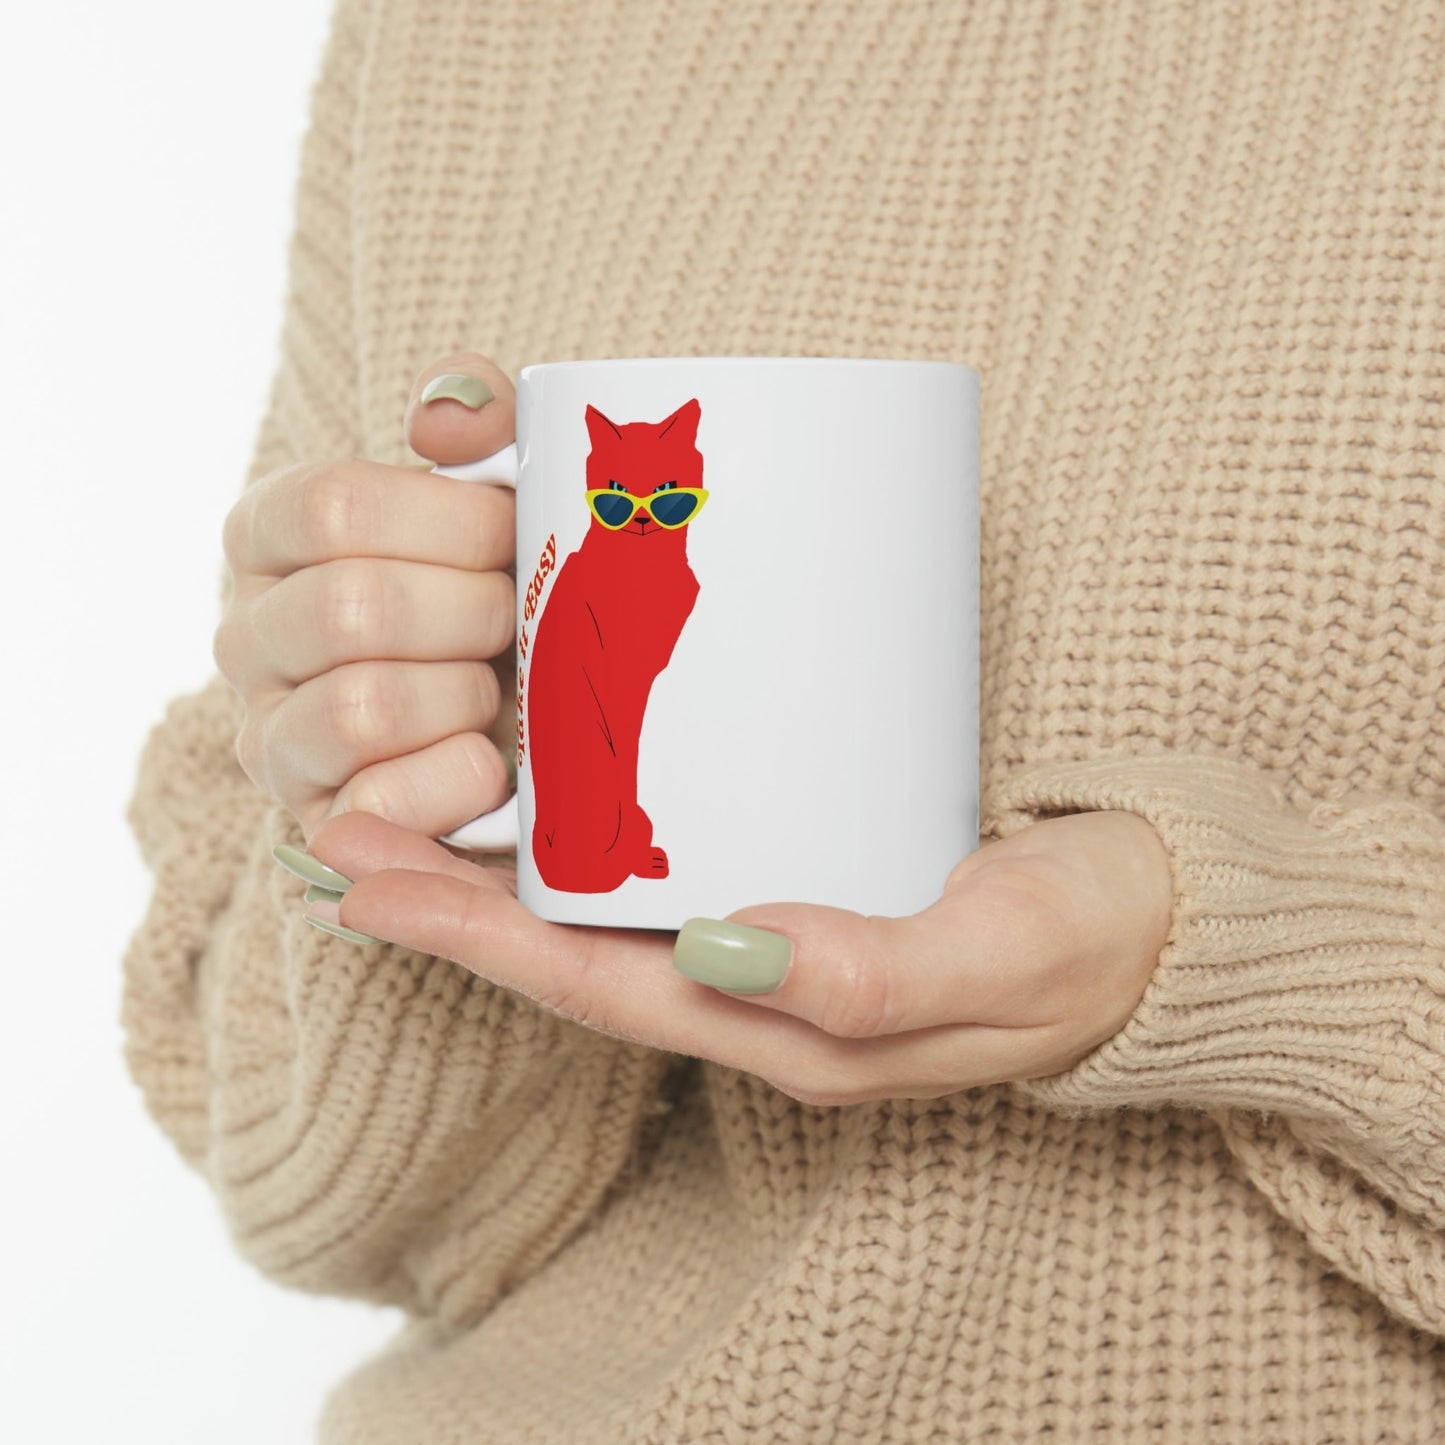 Take It Easy Red Cat Watching With Glasses Ceramic Mug 11oz Ichaku [Perfect Gifts Selection]